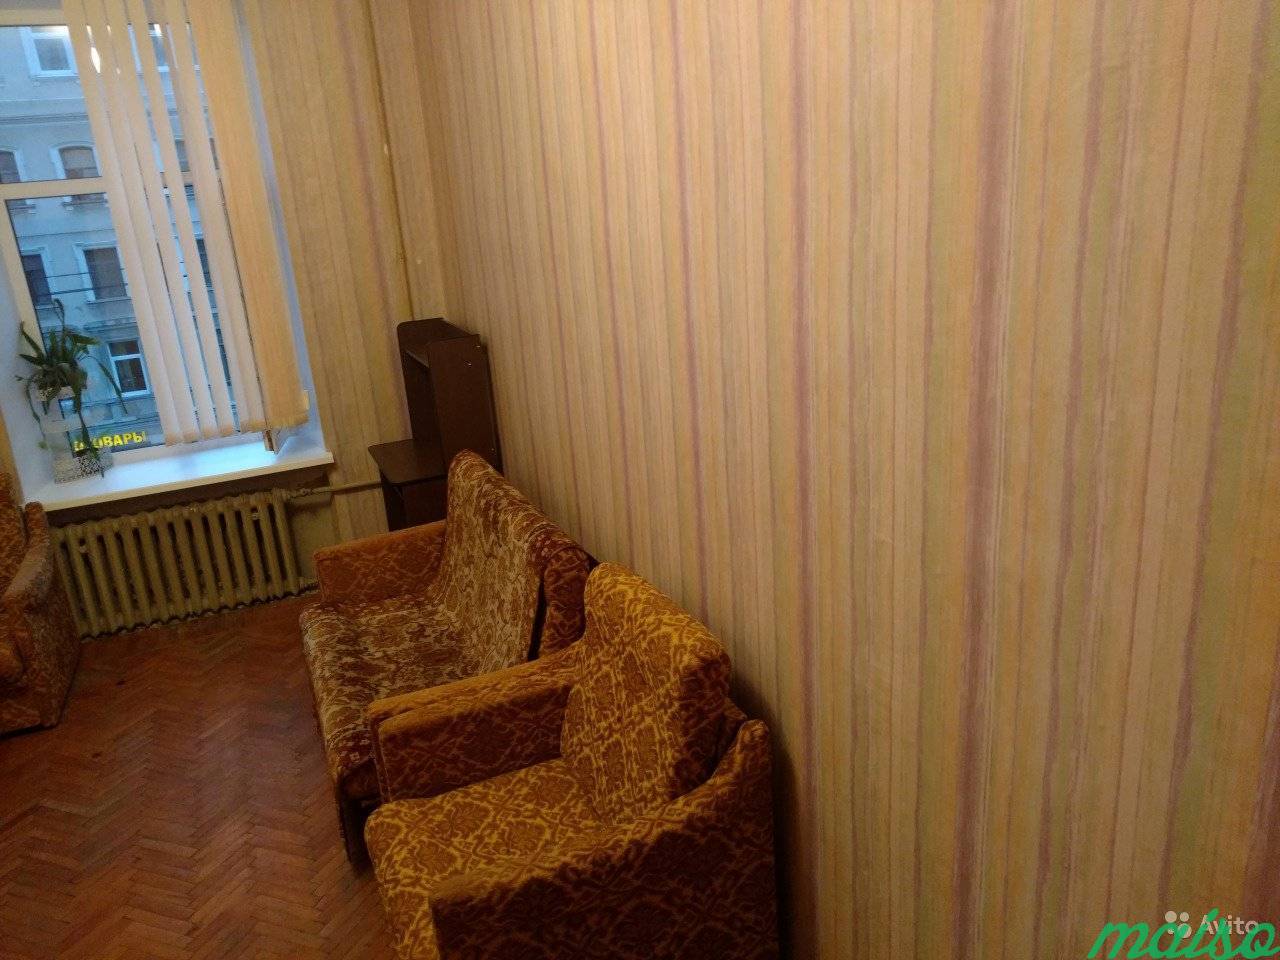 Комната 17 м² в 7-к, 3/3 эт. в Санкт-Петербурге. Фото 2